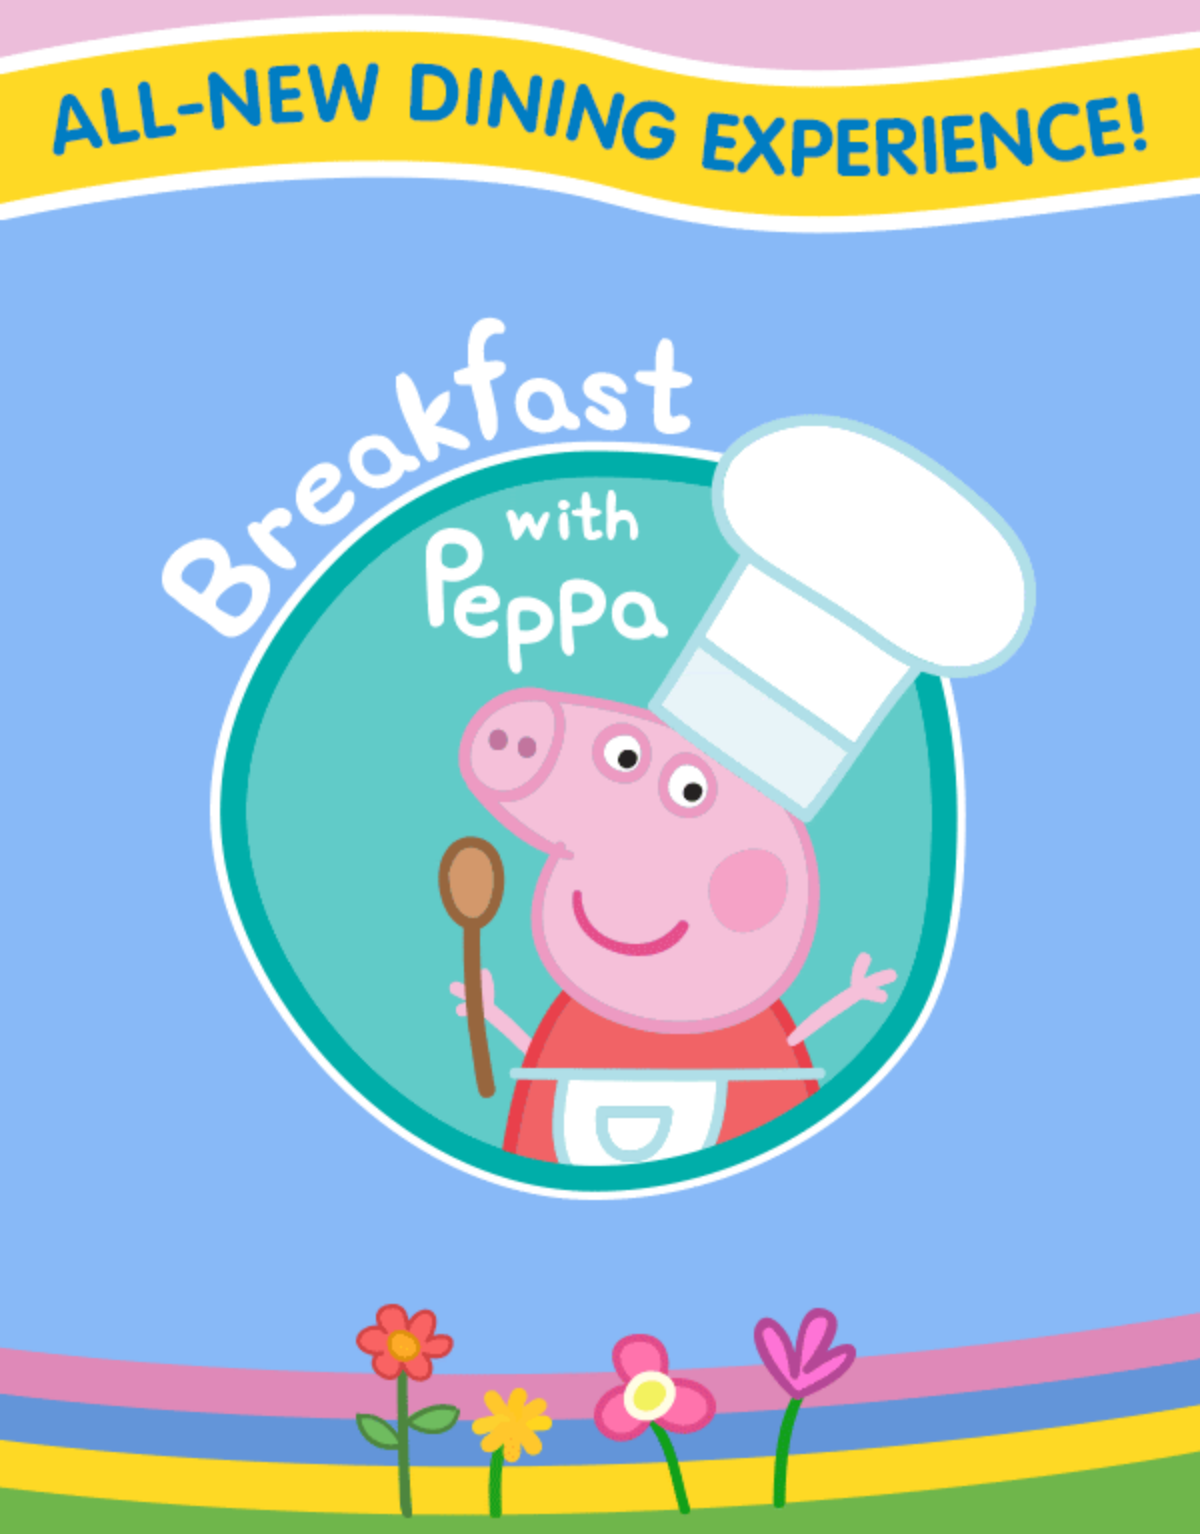 Breakfast with Peppa Pig « Euro Weekly News